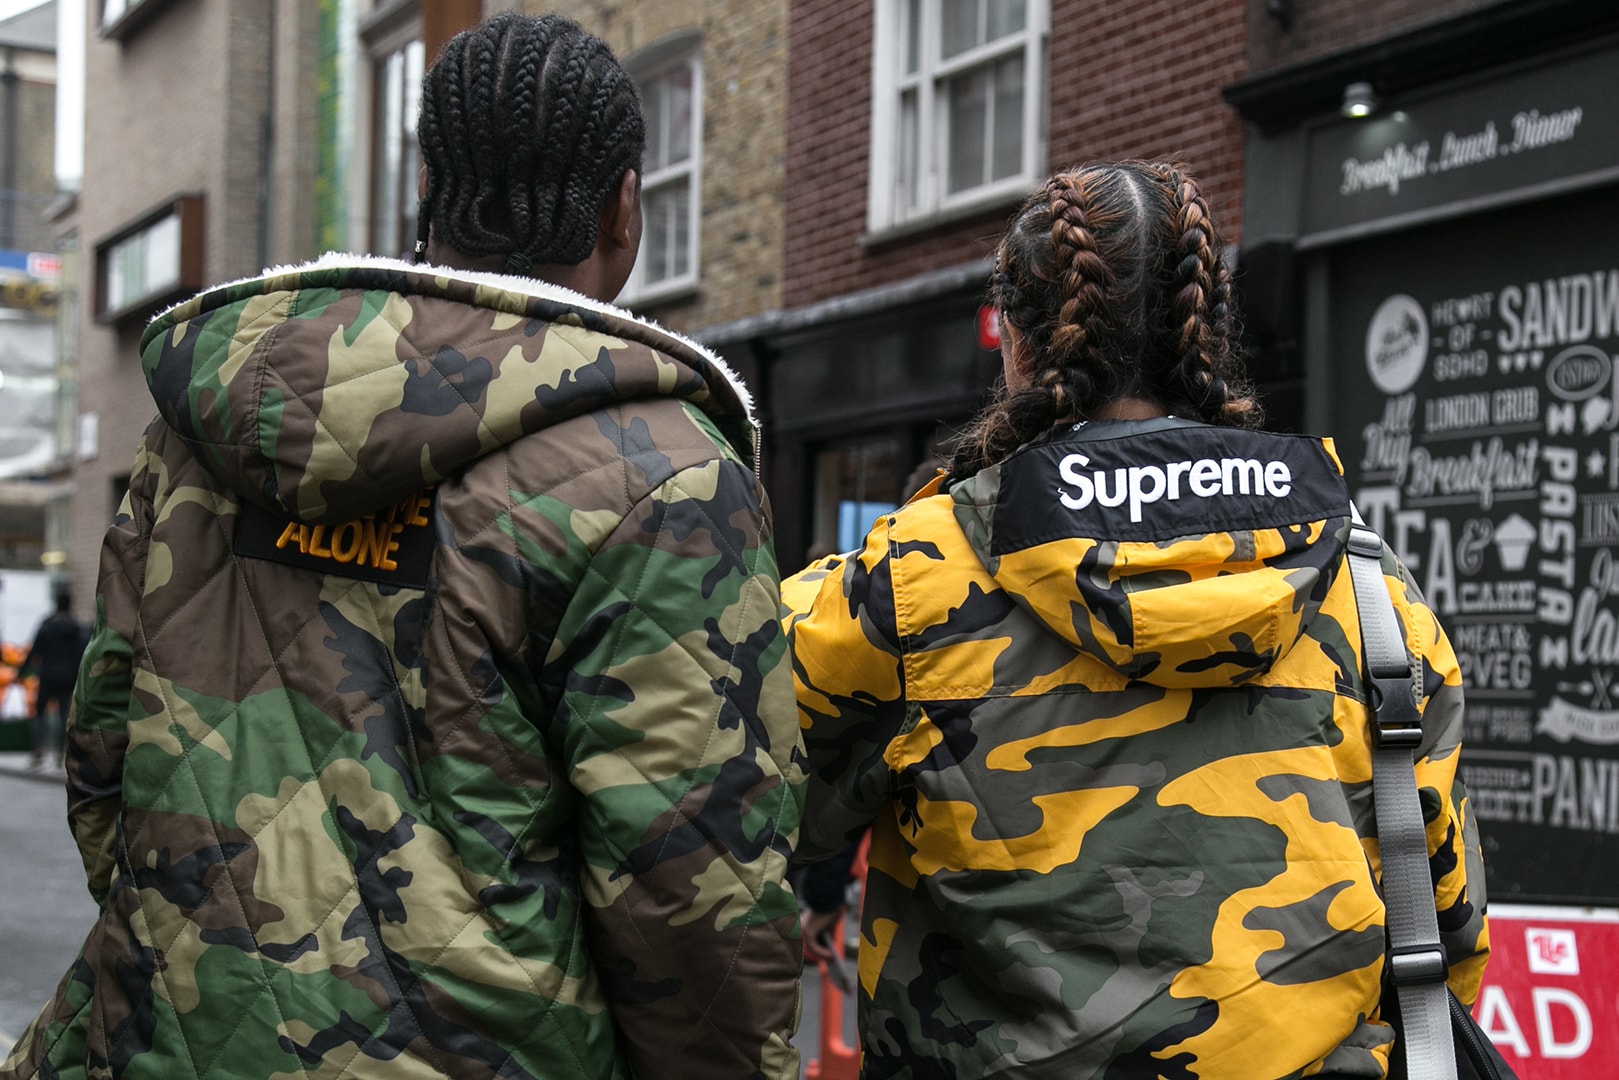 Supreme Nike 2017 London Drop 9 Street Style Photos Streetsnaps